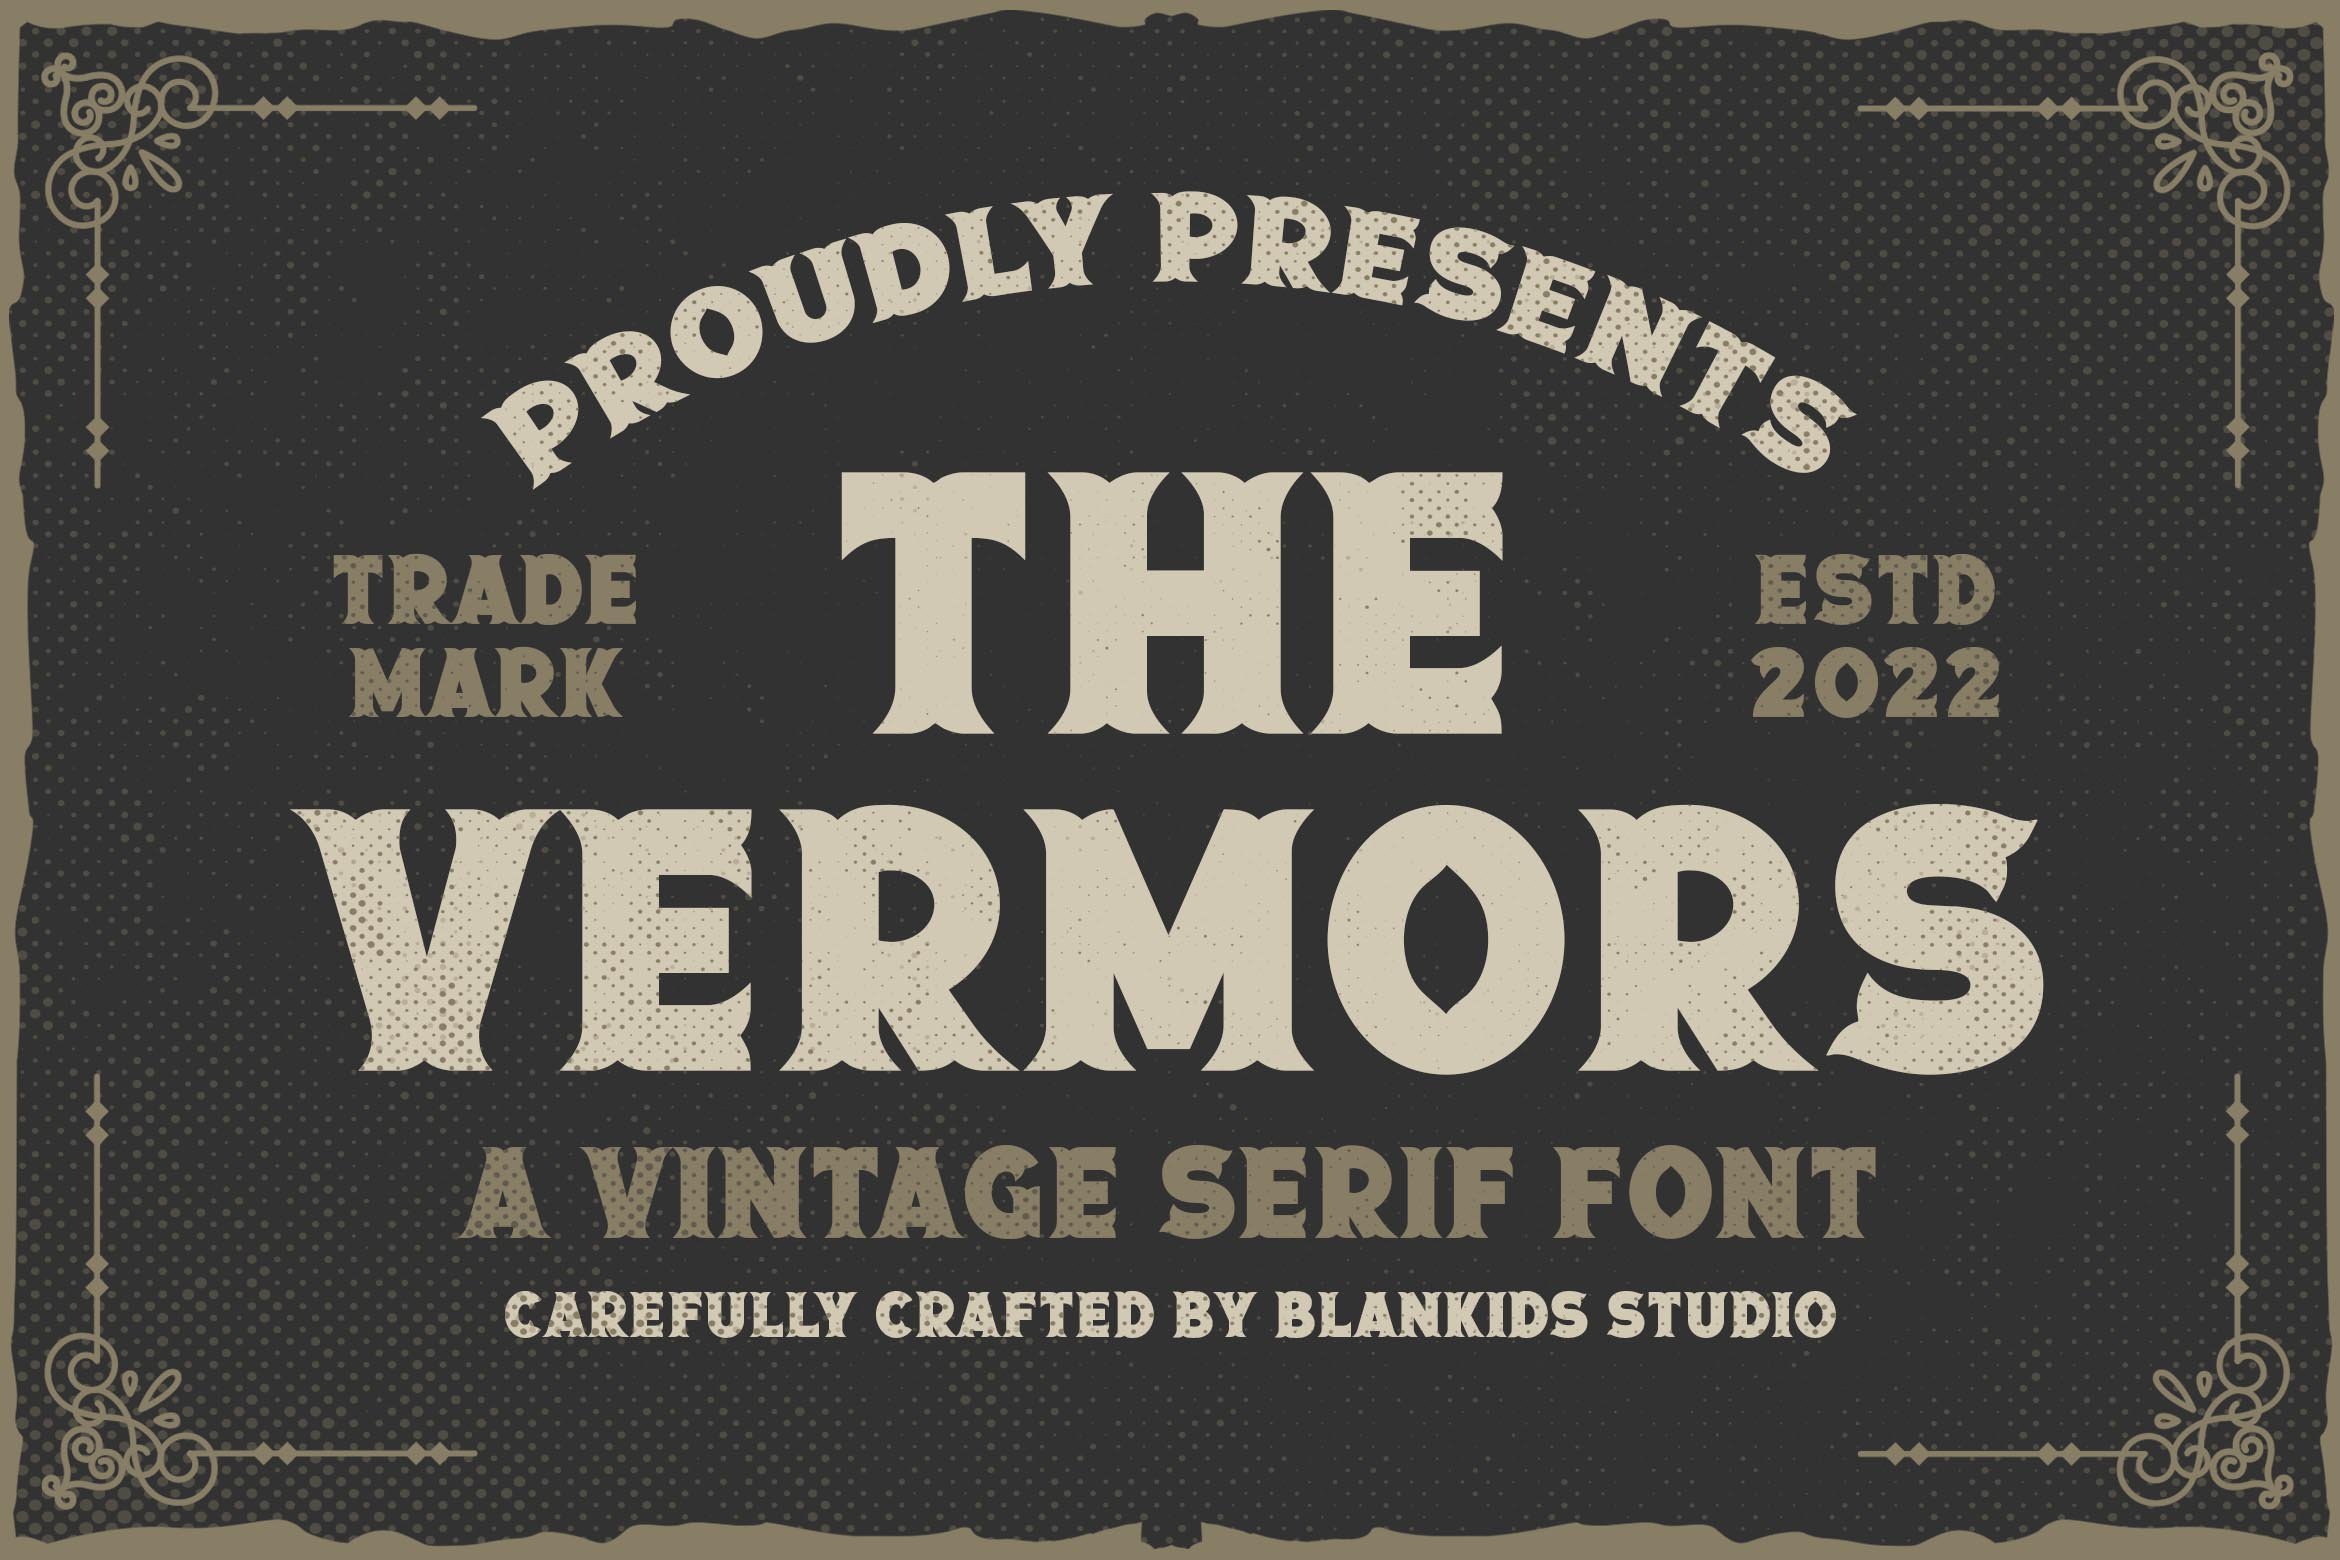 Vermors a Vintage Serif Font cover image.